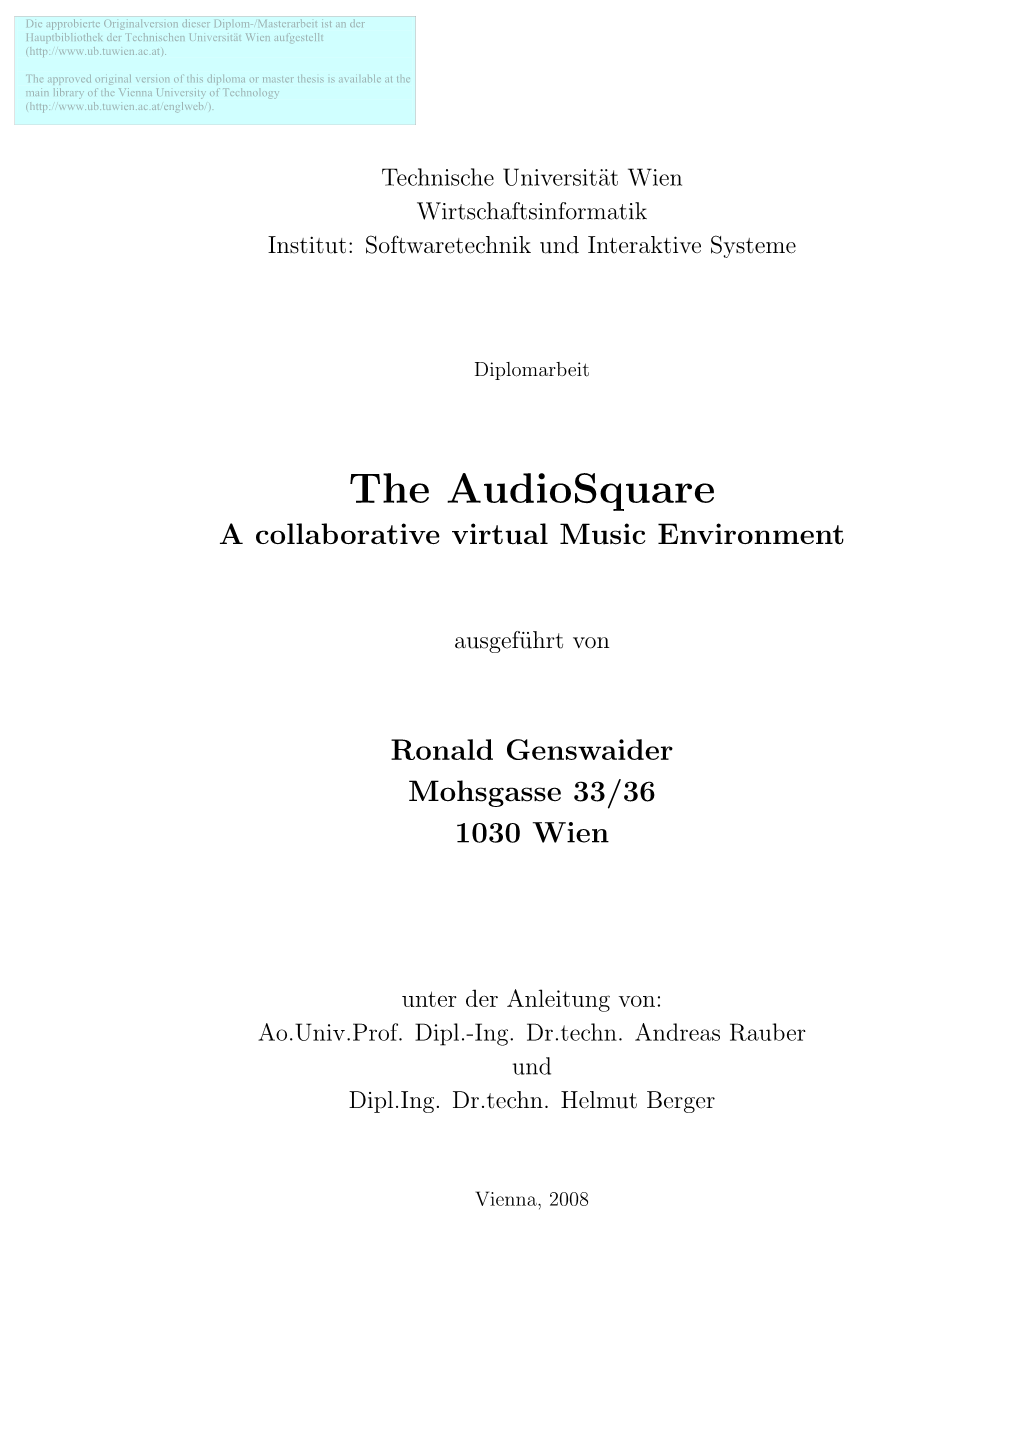 The Audiosquare a Collaborative Virtual Music Environment